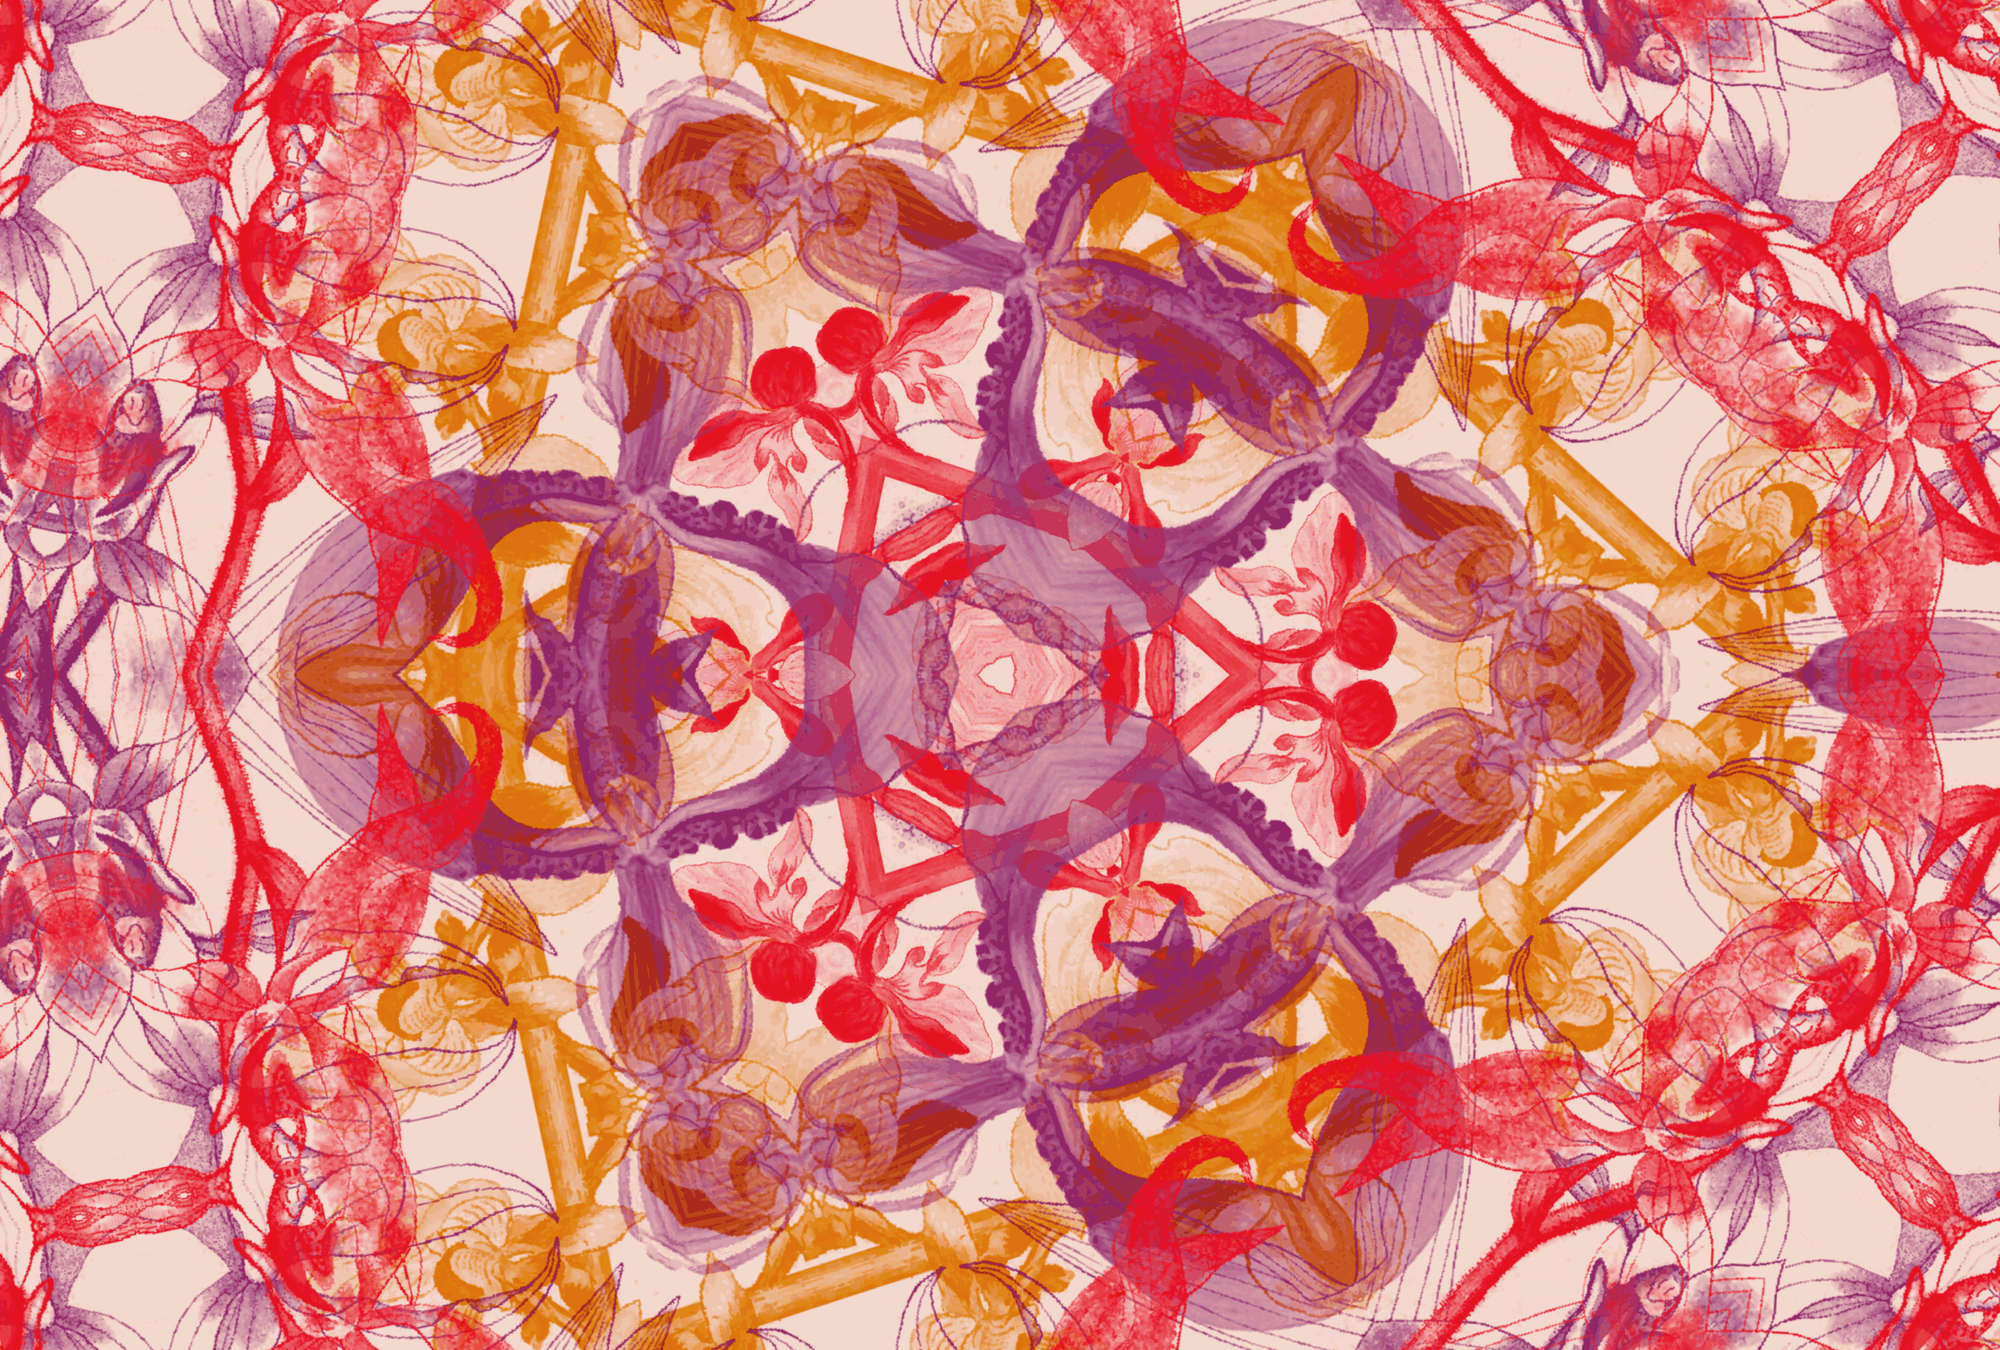             Blütenmeer – Fototapete abstrakte Blumen gemustert
        